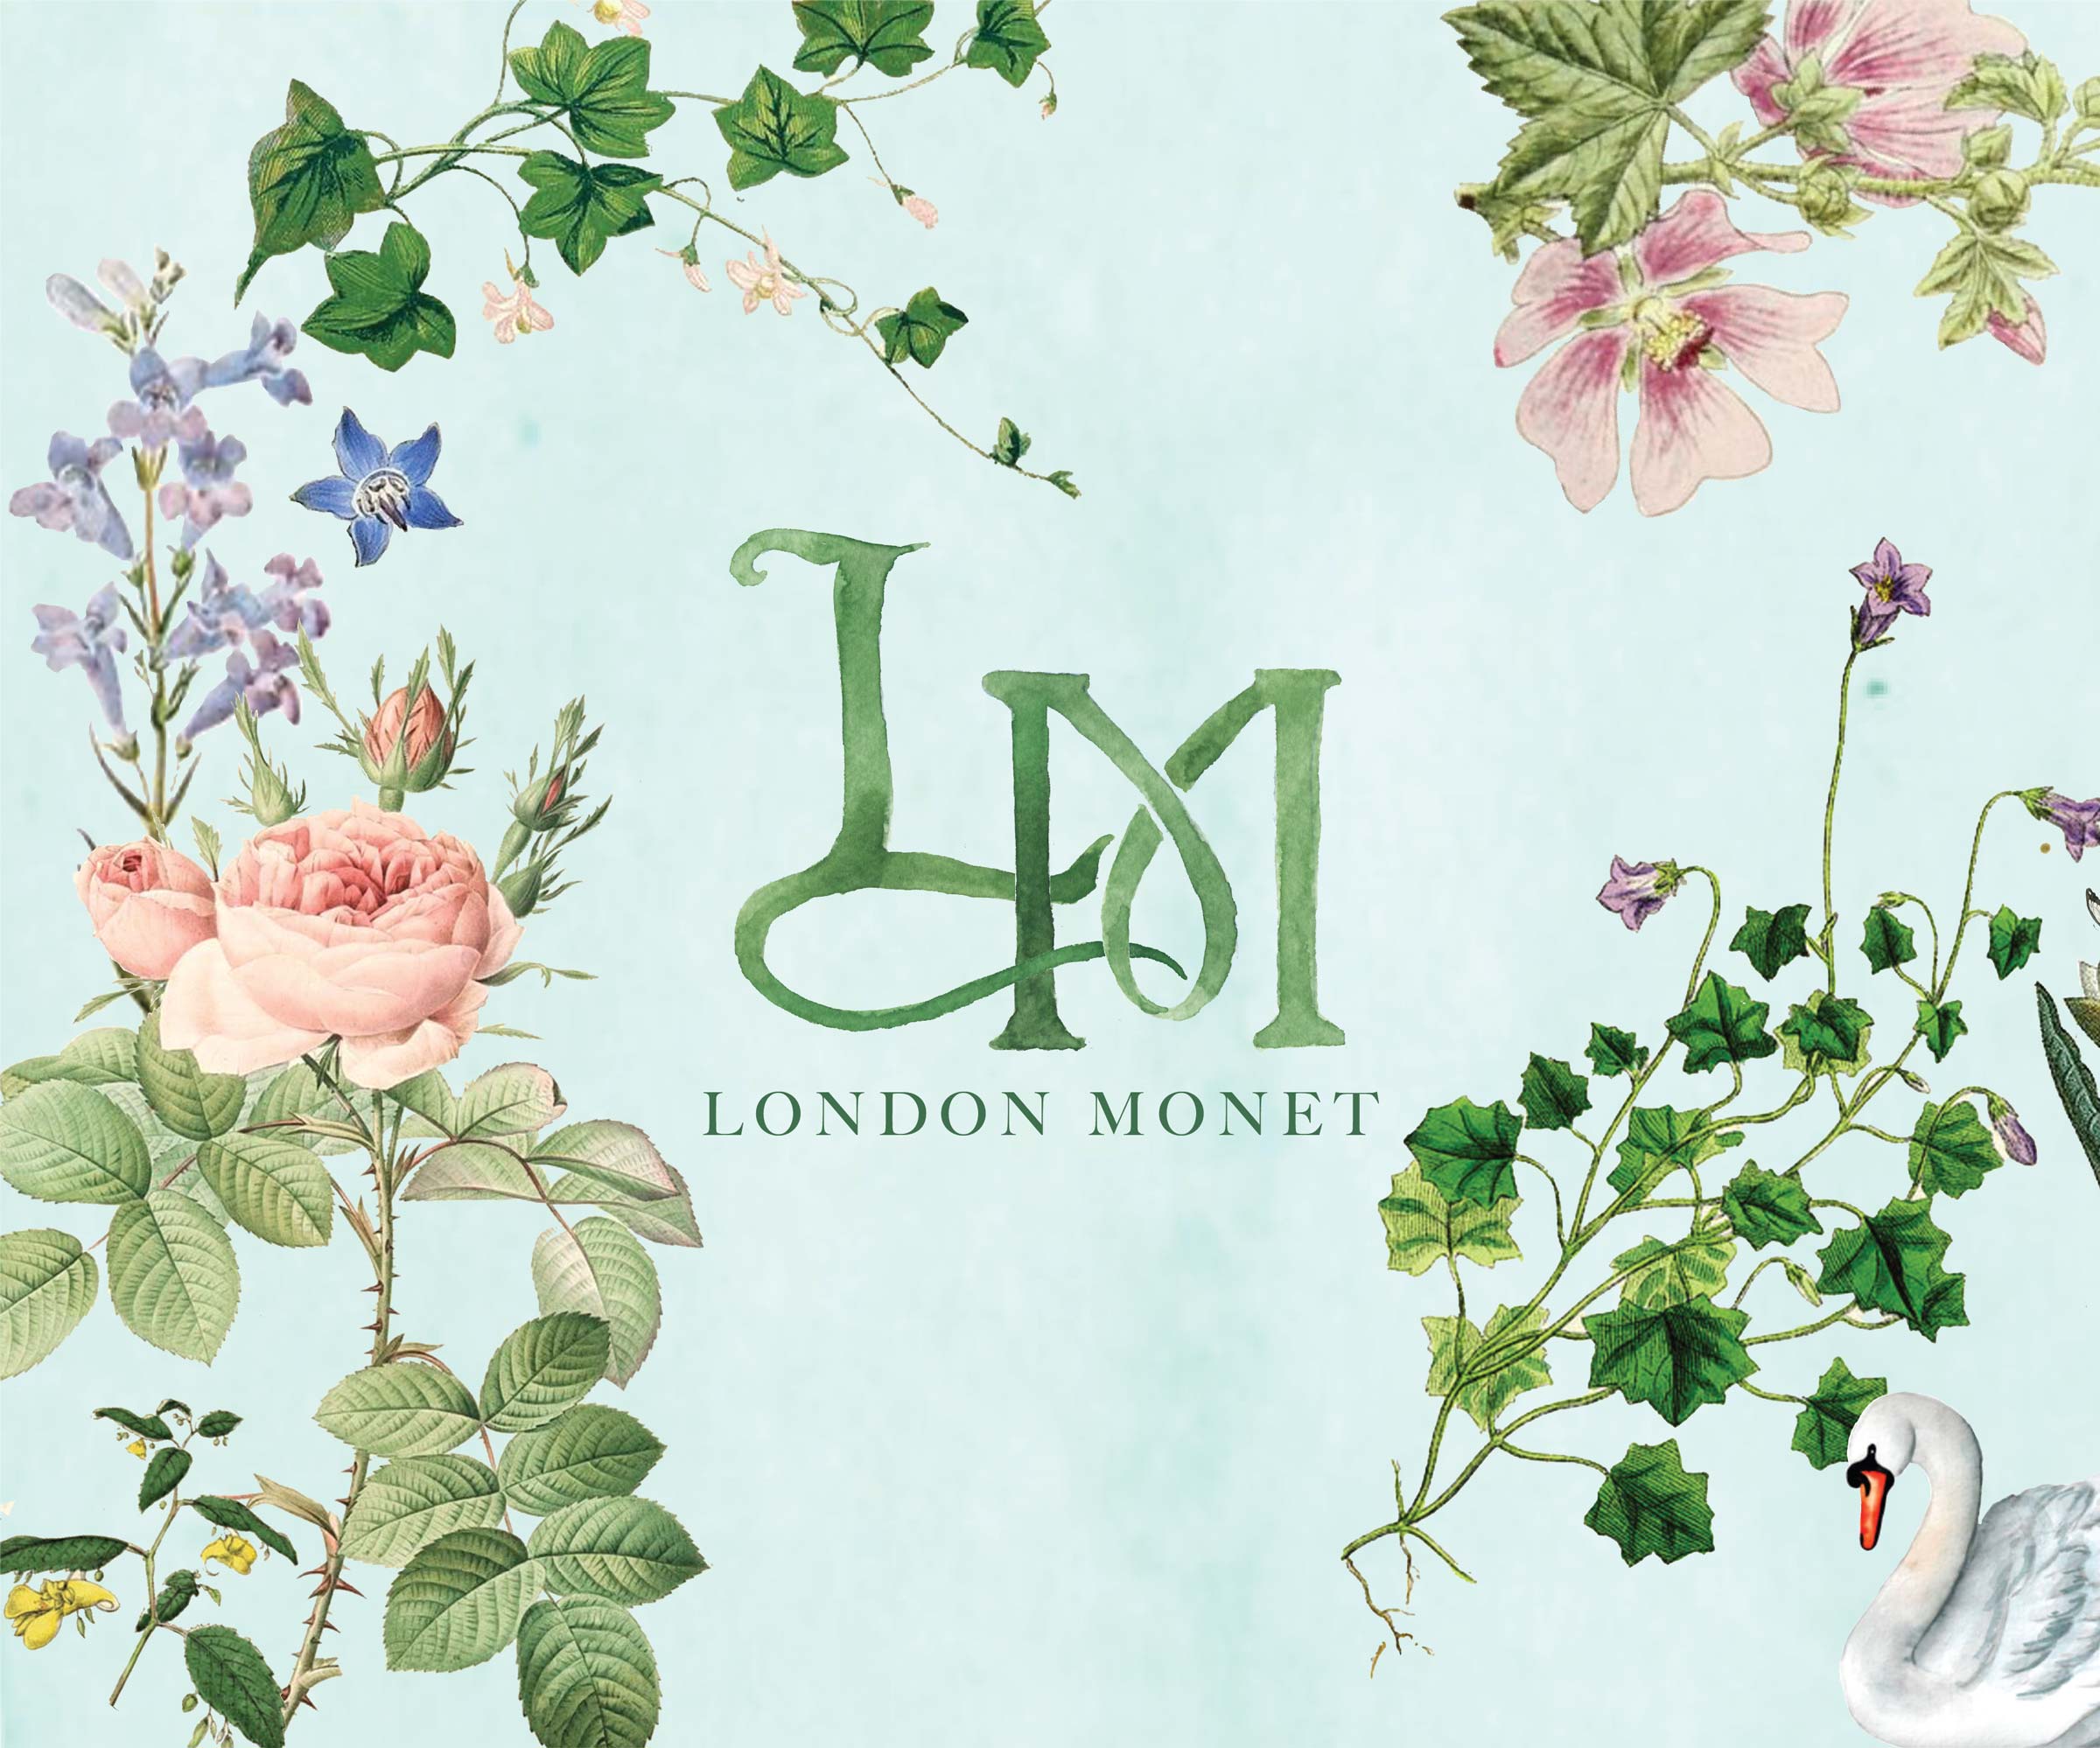 London Monet